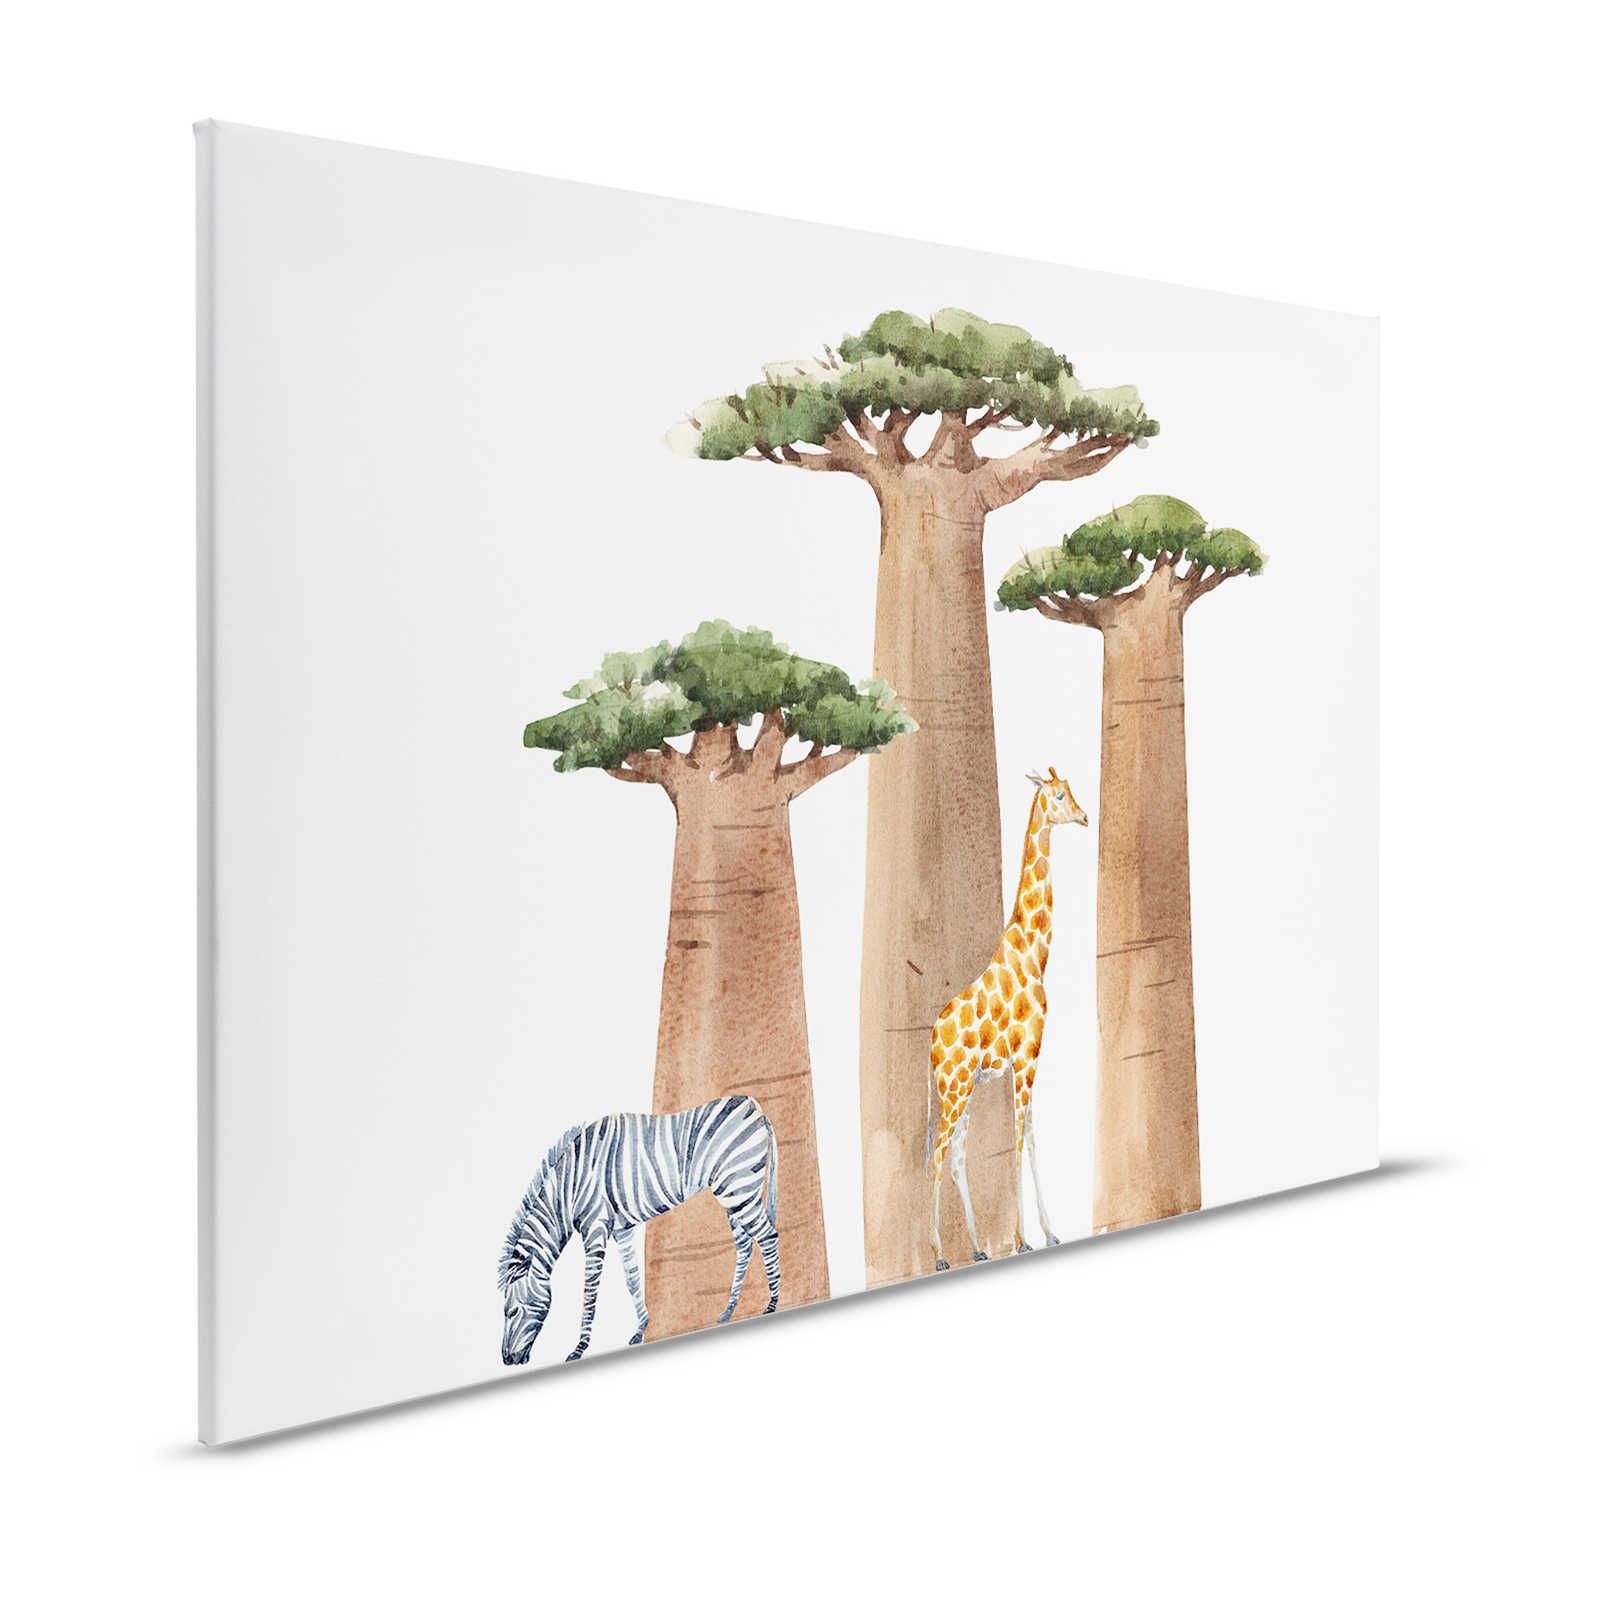 Toile Savane avec girafe et zèbre - 120 cm x 80 cm
